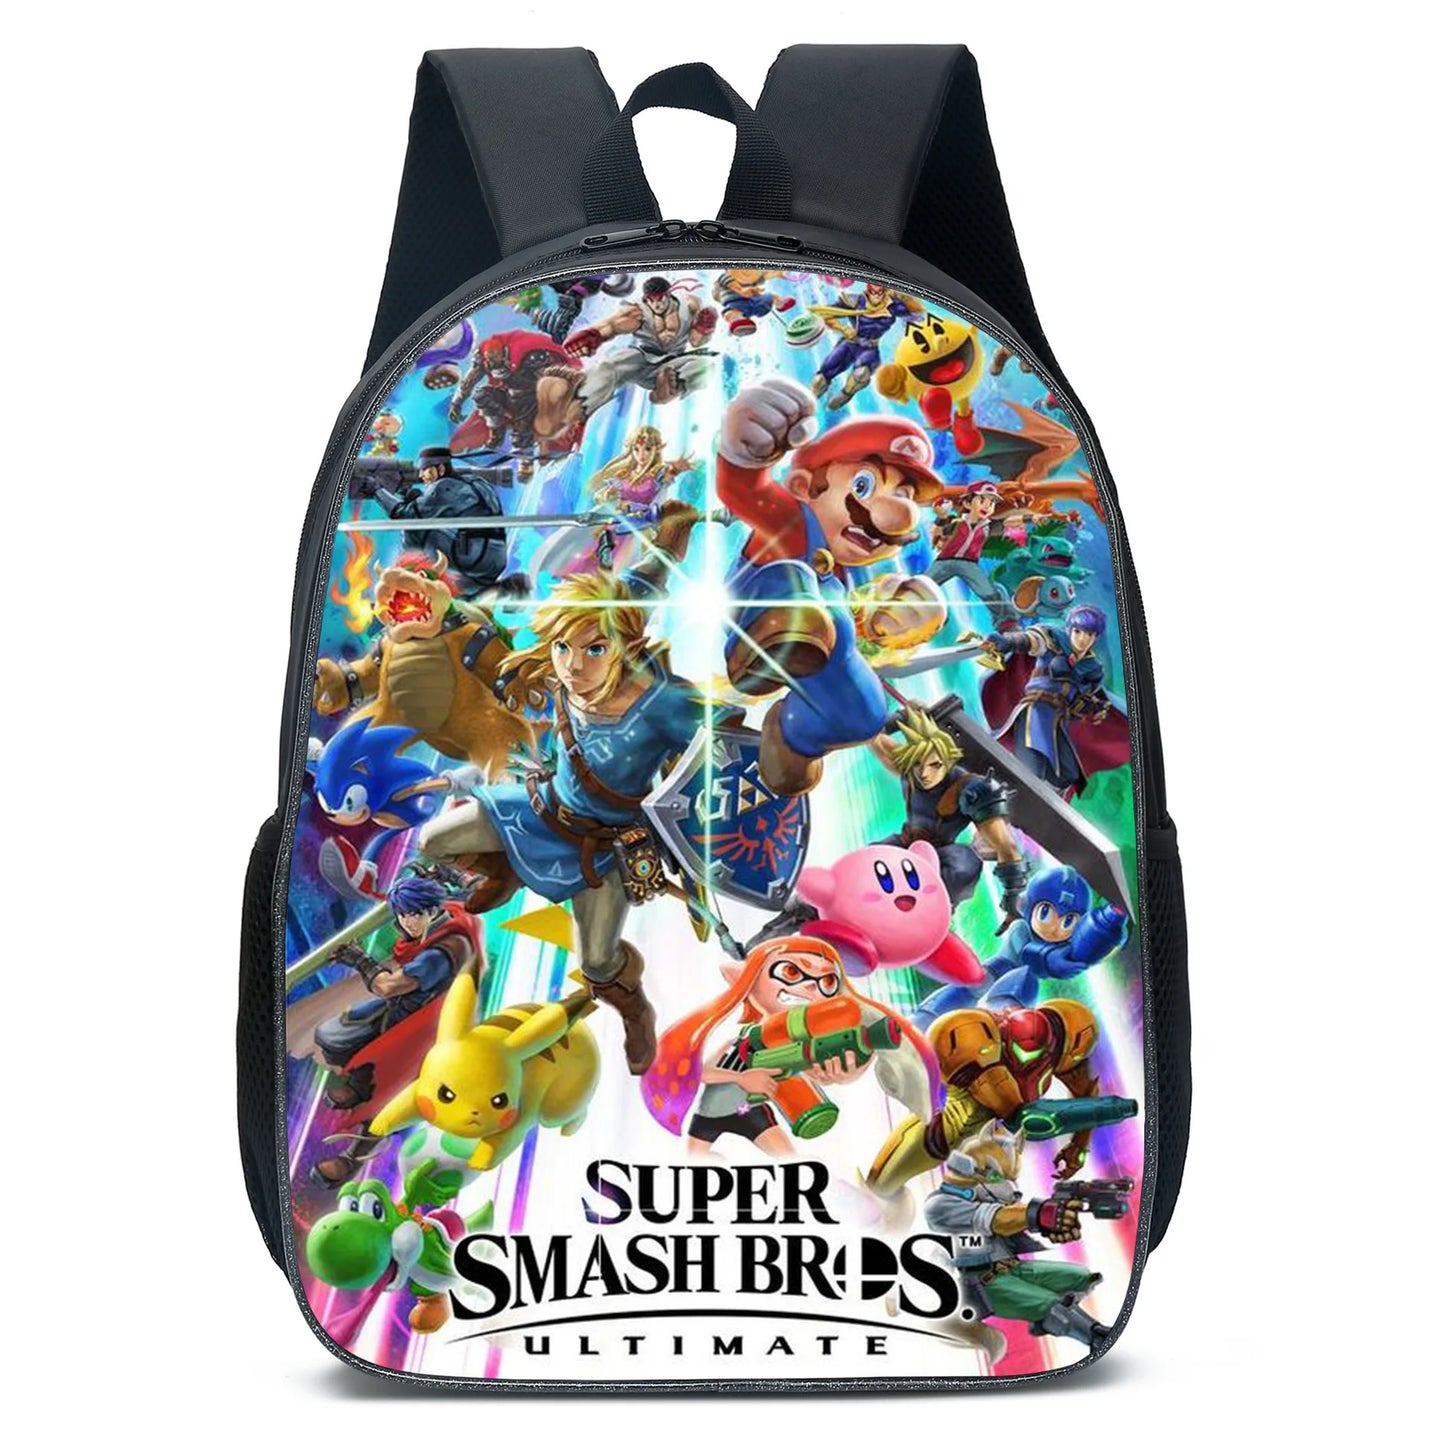 Anime Super Mario Luigi Peach Bowser Koopa Yoshi Cosplay Costume Backpack Computer School Bag Gift